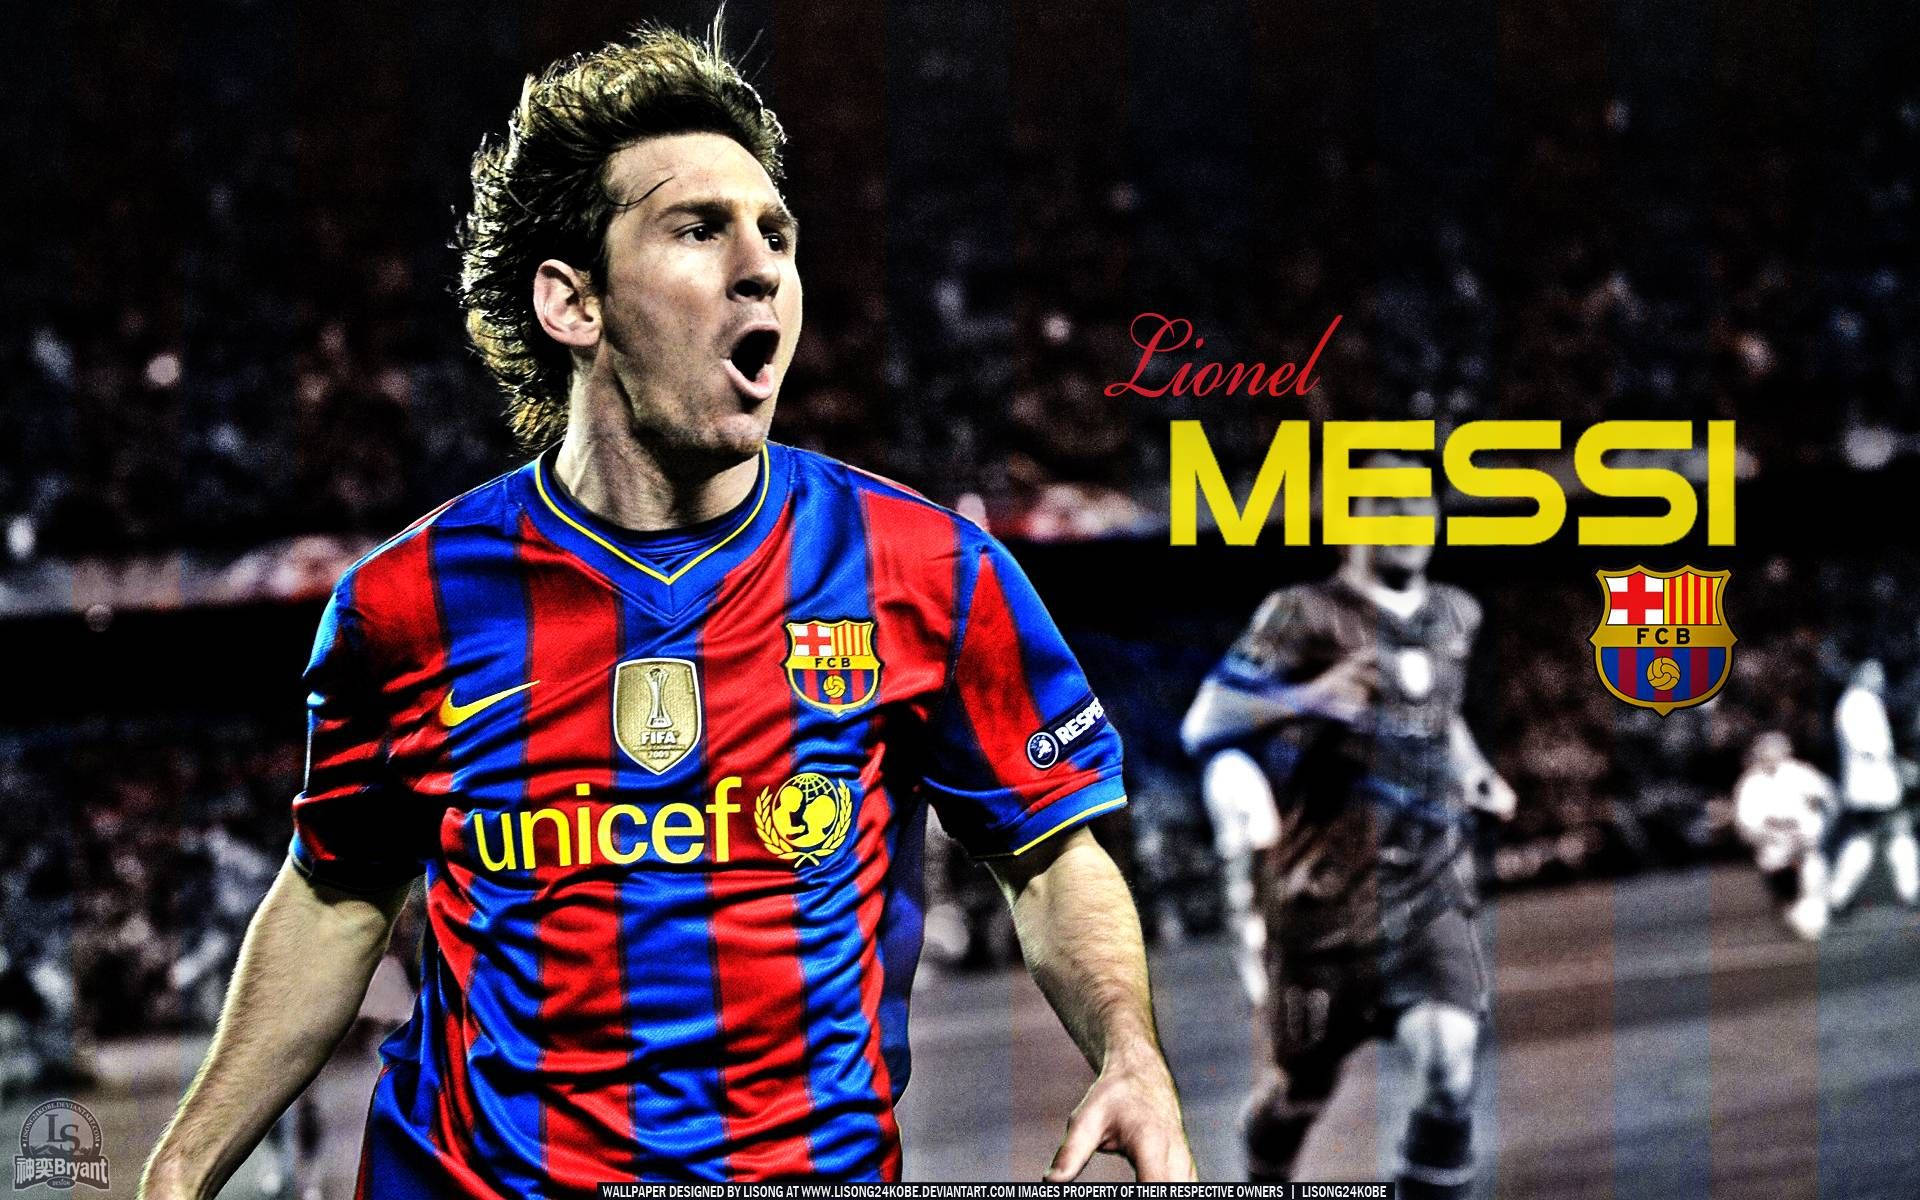 Cheering Messi Fcb Unicef